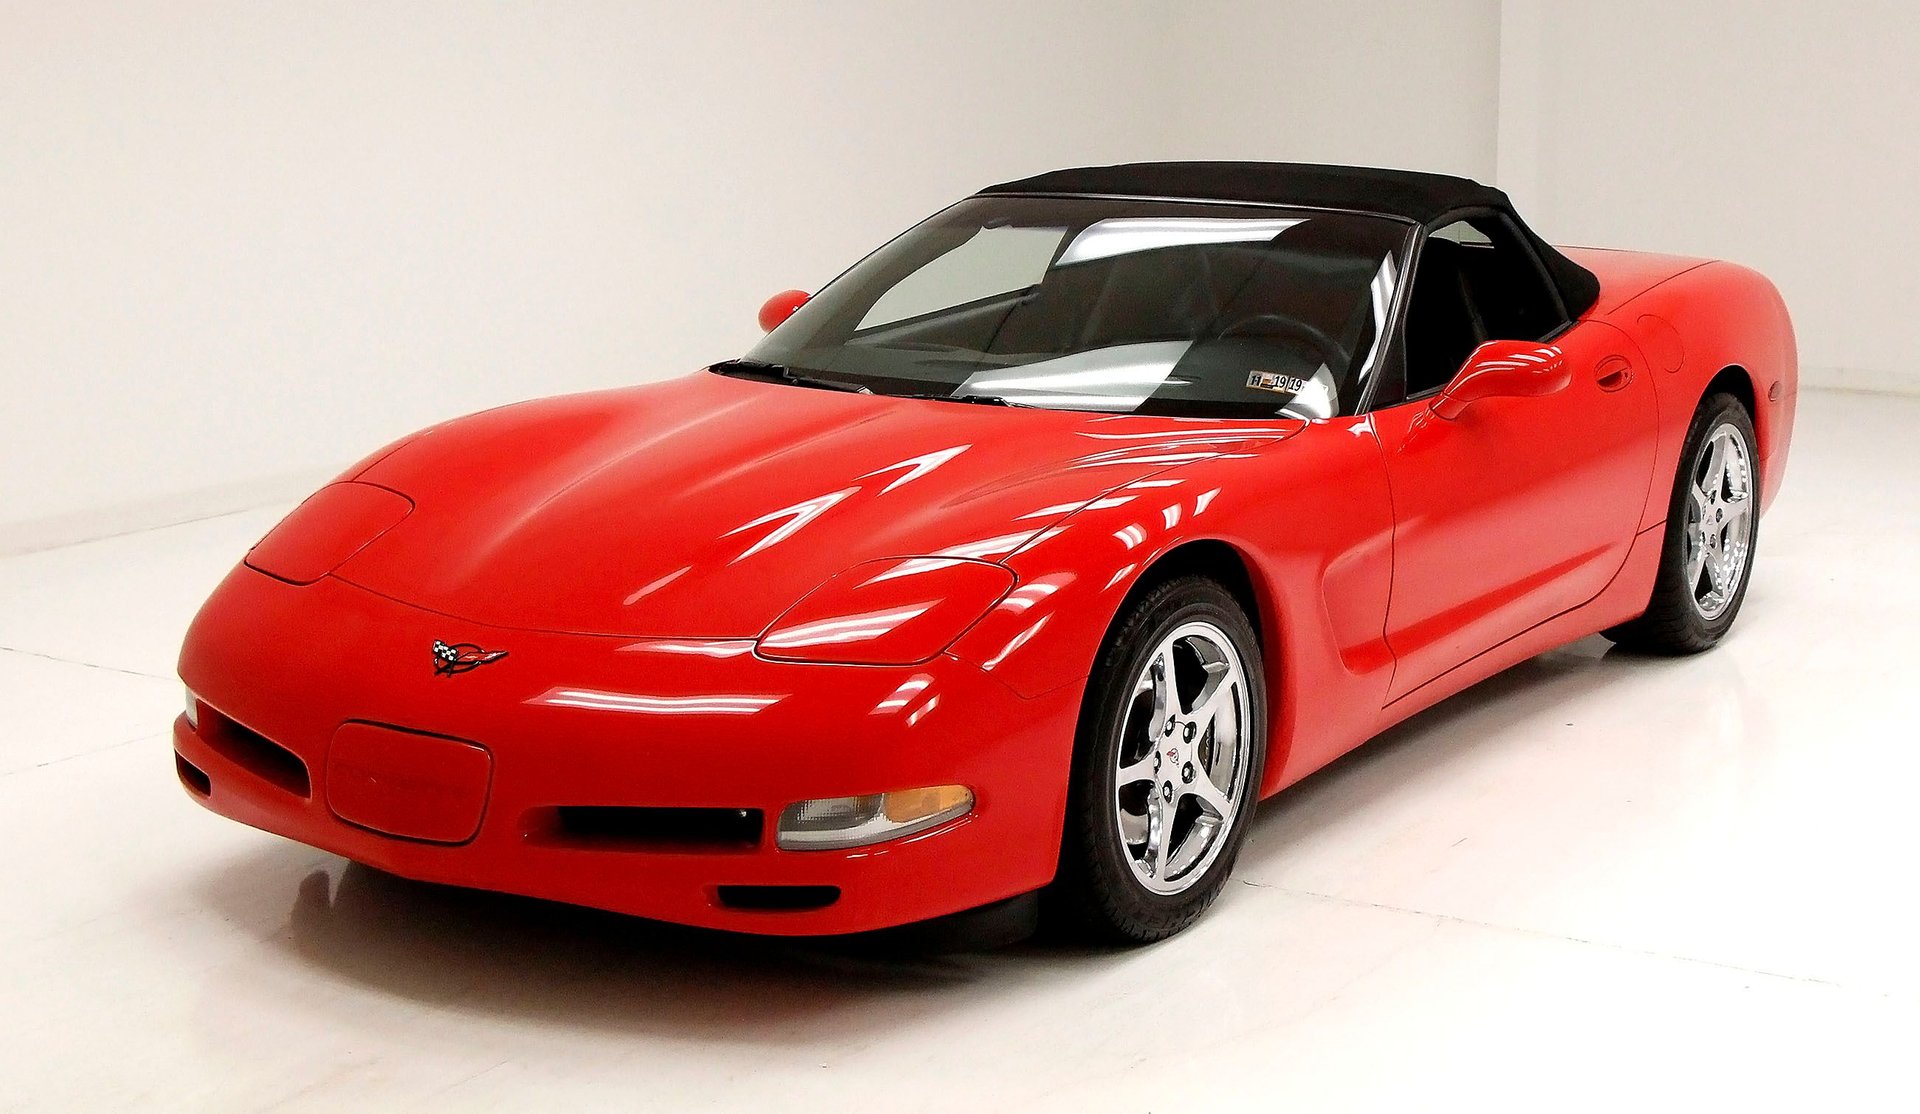 Corvette Of The Day: 1999 Chevrolet Corvette Convertible